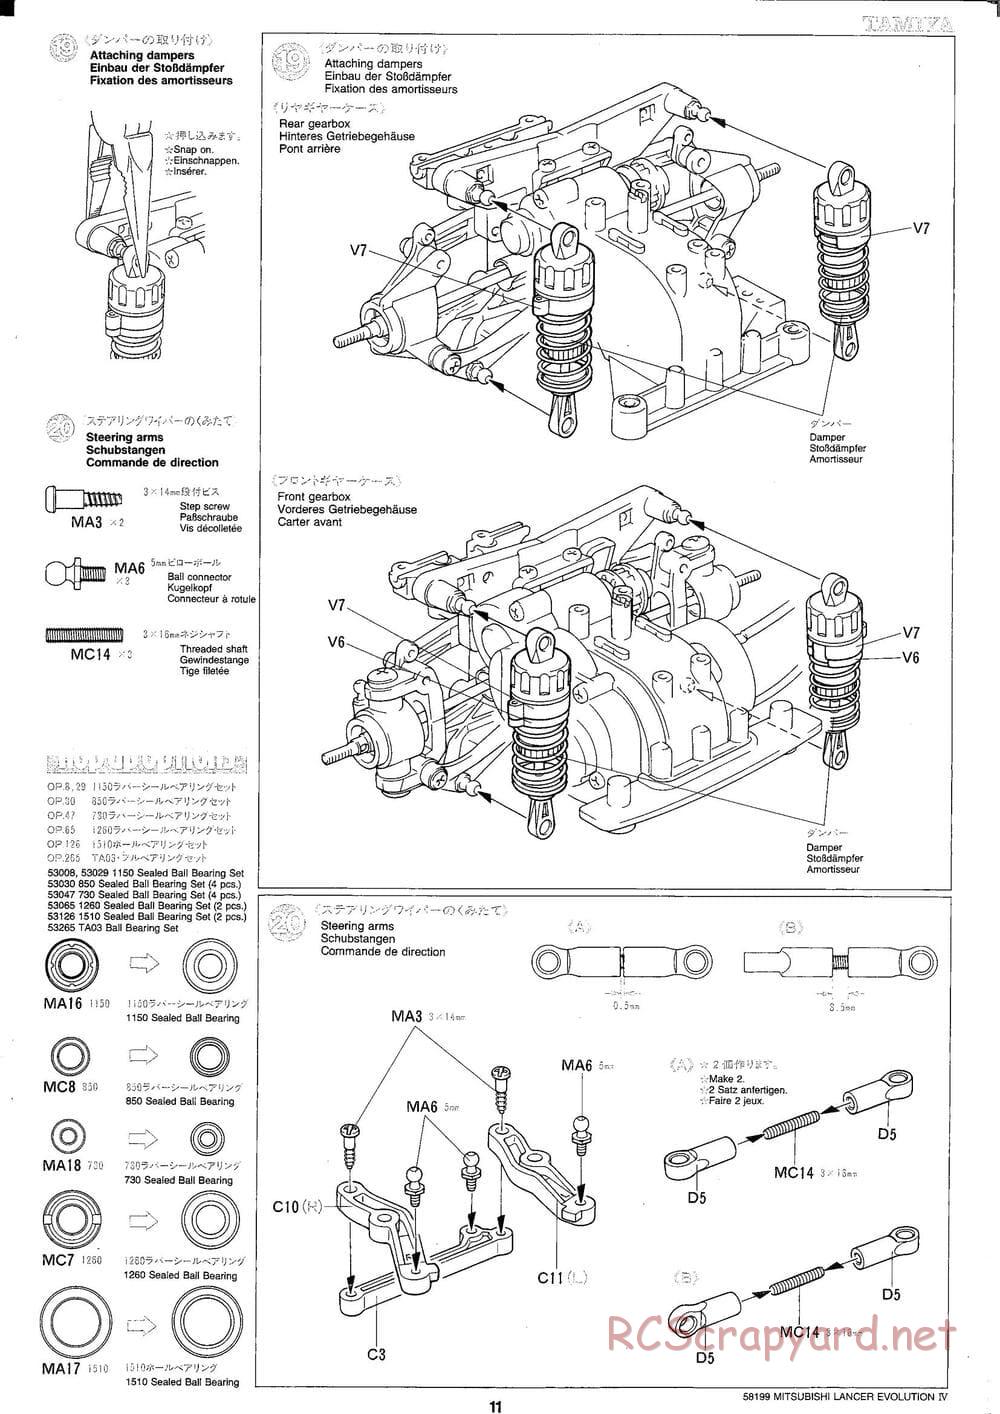 Tamiya - Mitsubishi Lancer Evolution IV - TA-03F Chassis - Manual - Page 11